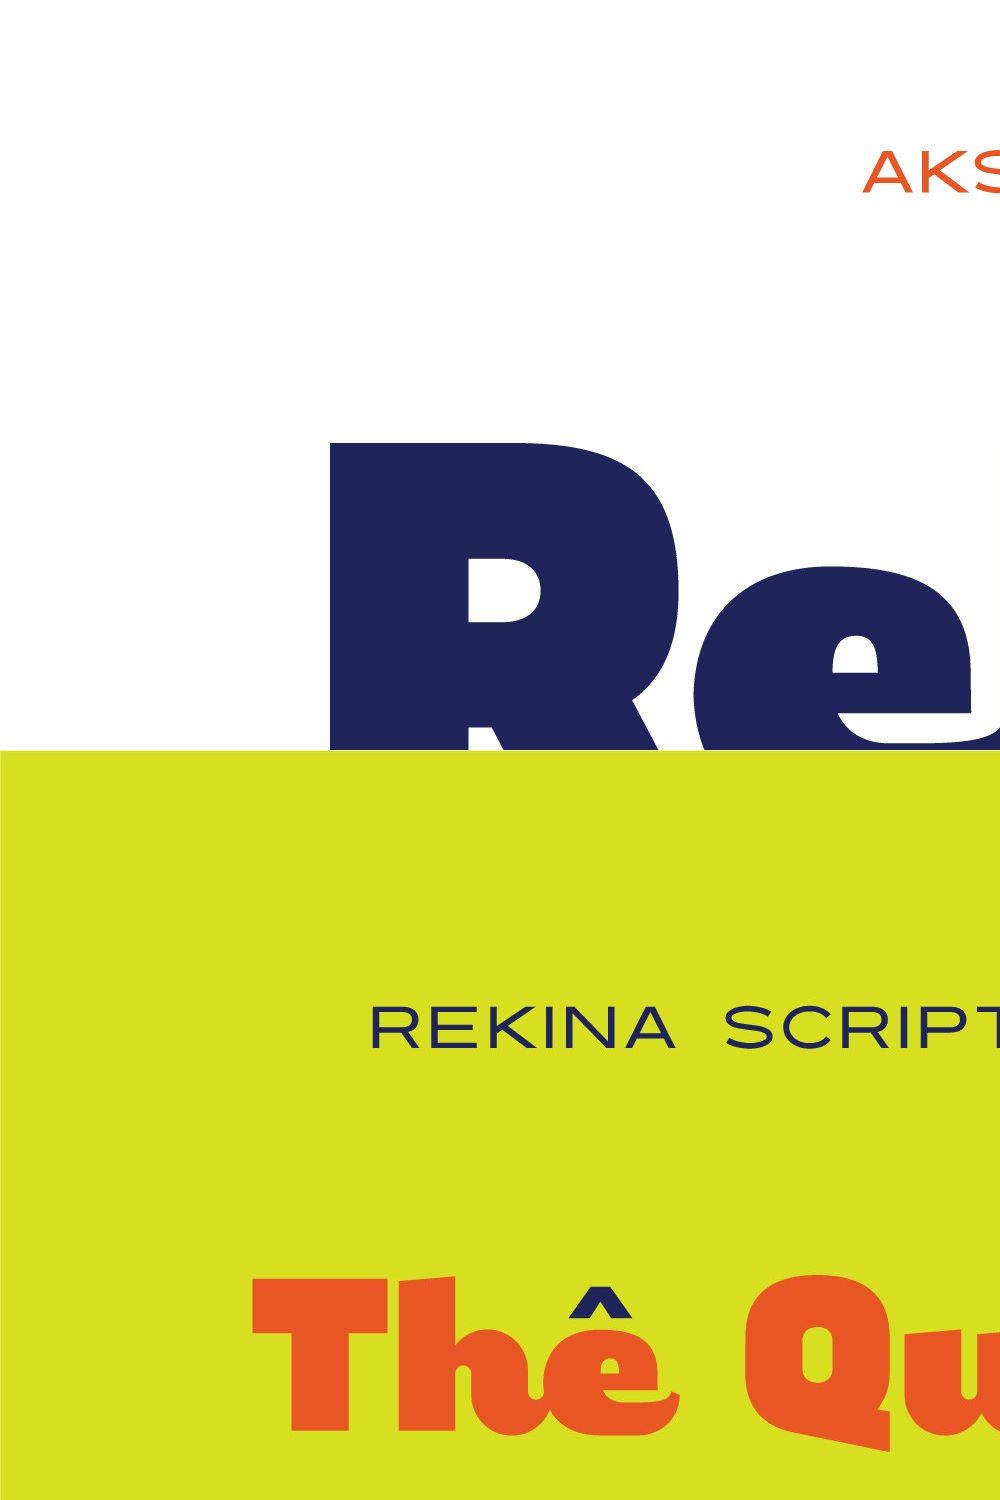 Rekina - Vintage Bold Script pinterest preview image.